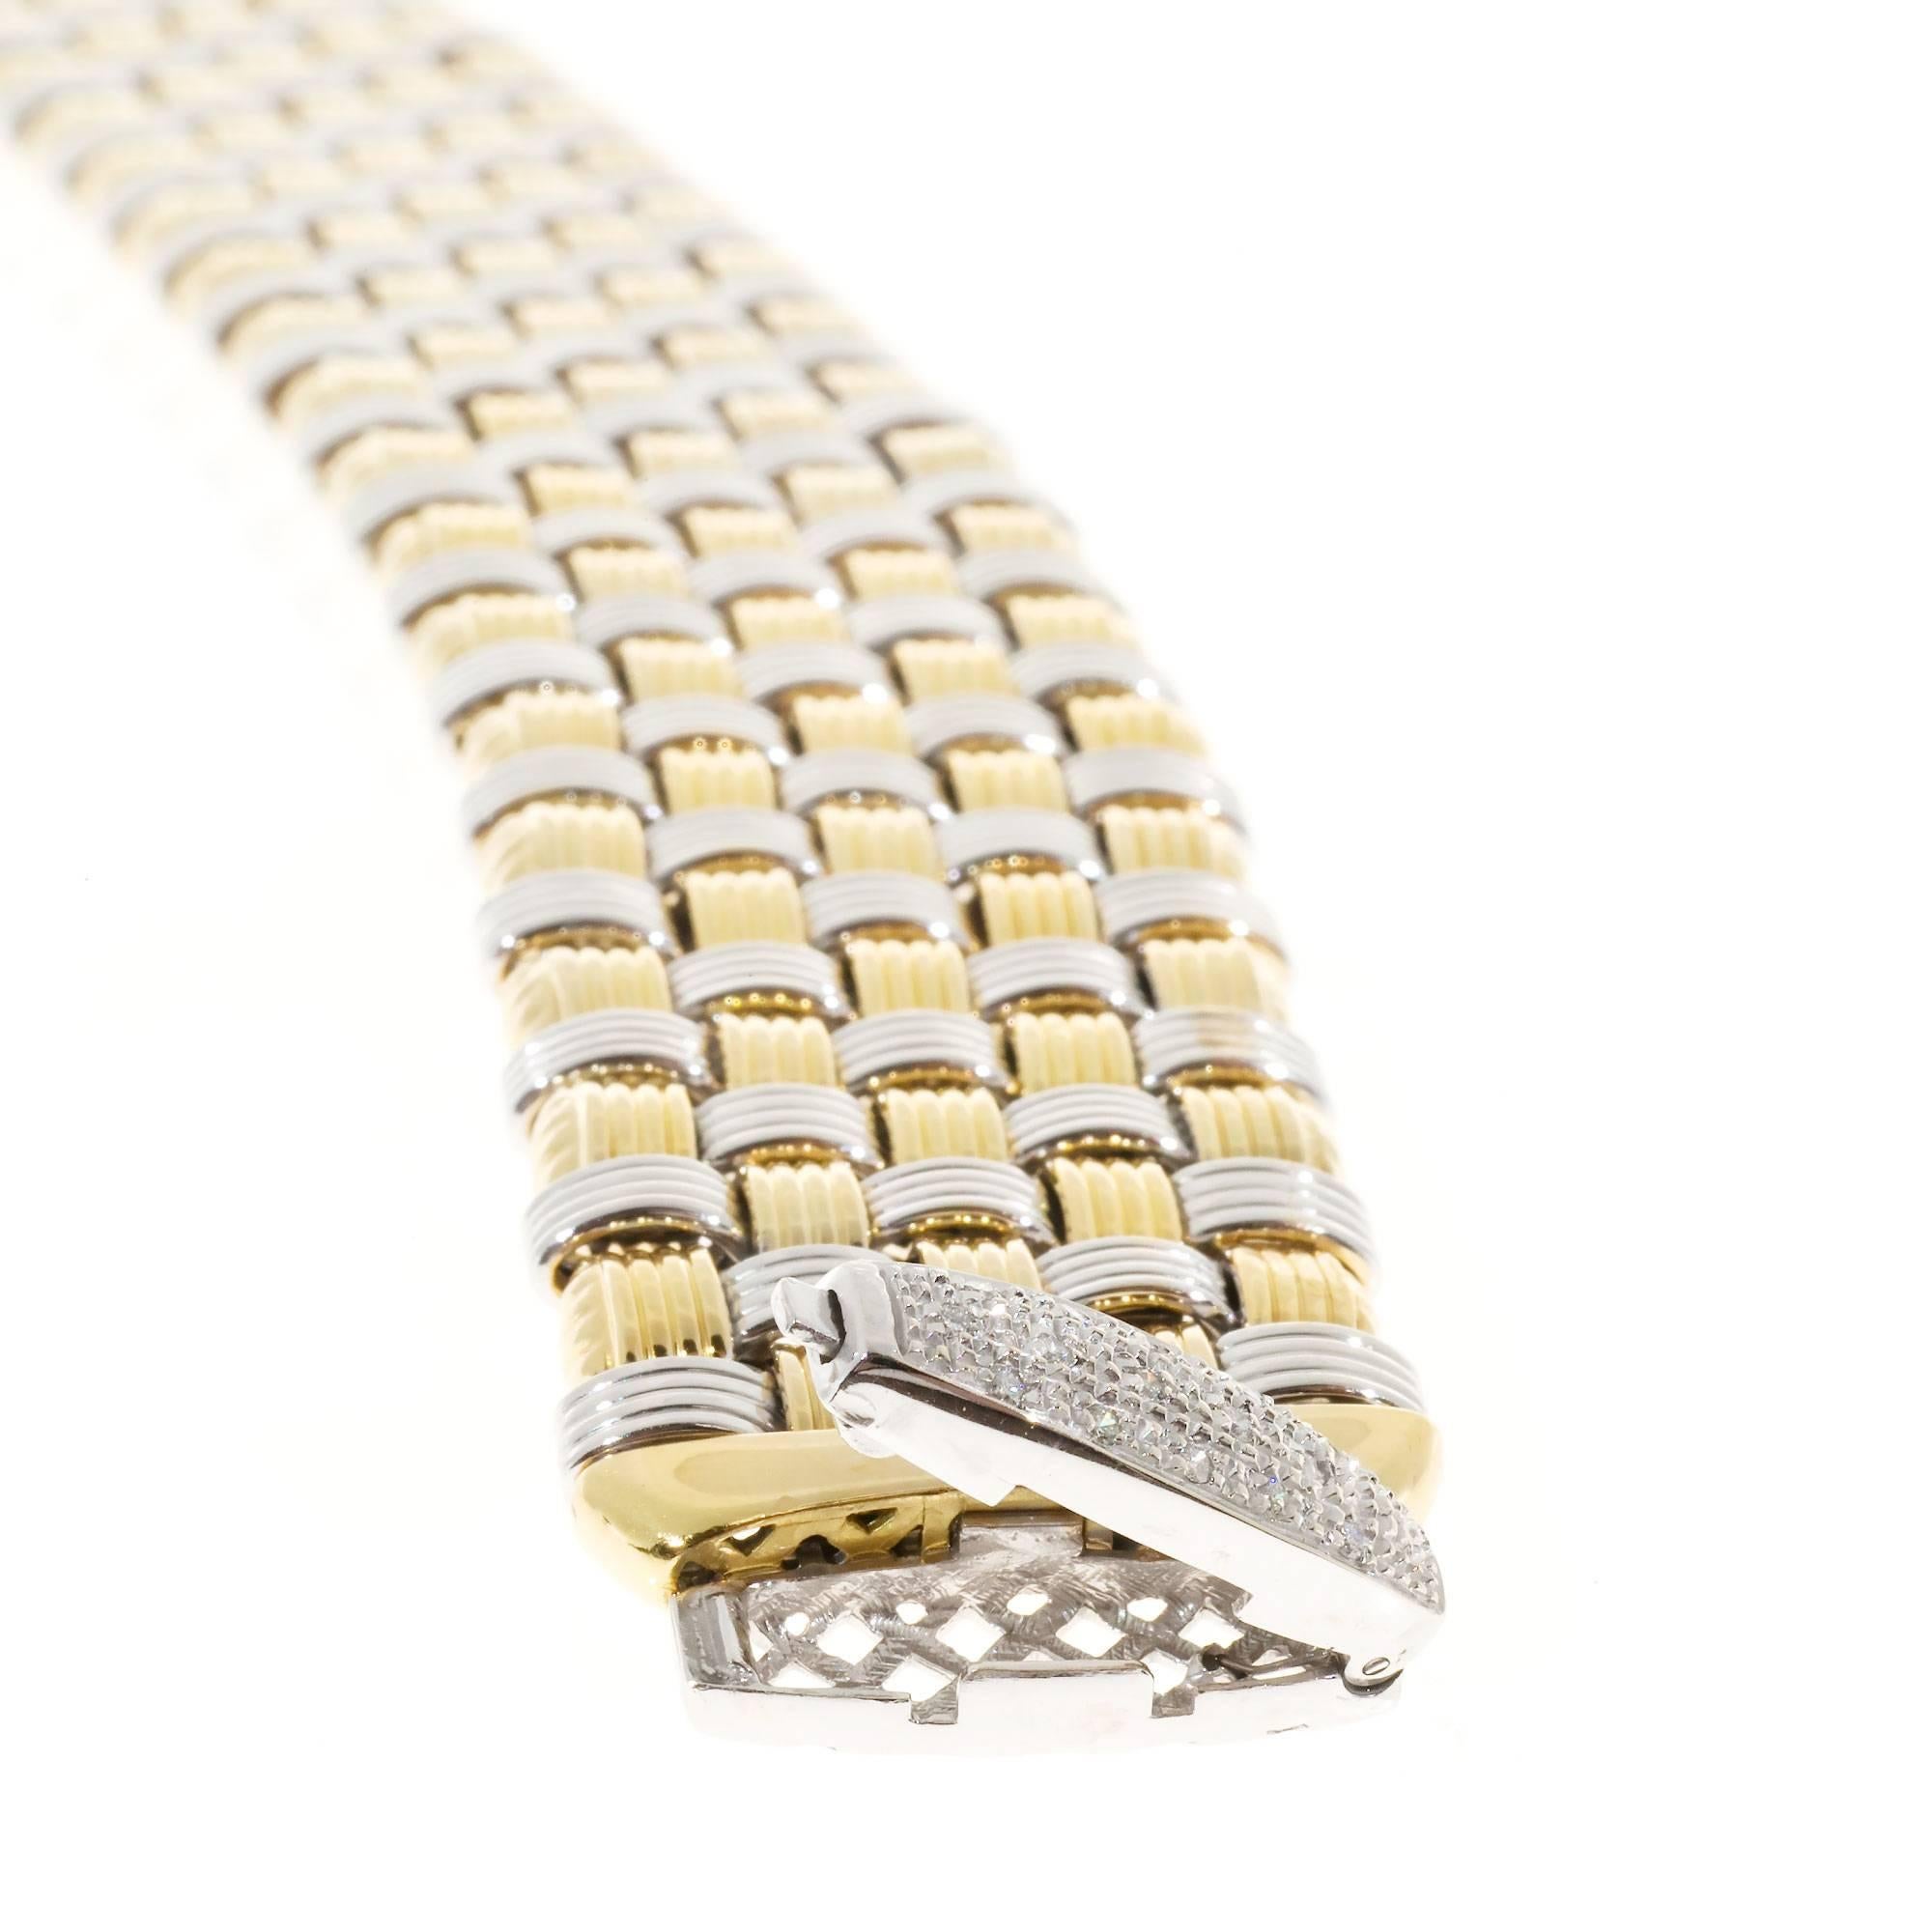 Beautiful OTC Italian 18k yellow and white gold mesh bracelet with diamond catch. Circa 1960-1970. Italian design beauty.

15 round diamonds, .01ct each, approx. total weight .15cts, H, SI1
18k yellow and white gold
Tested and stamped: